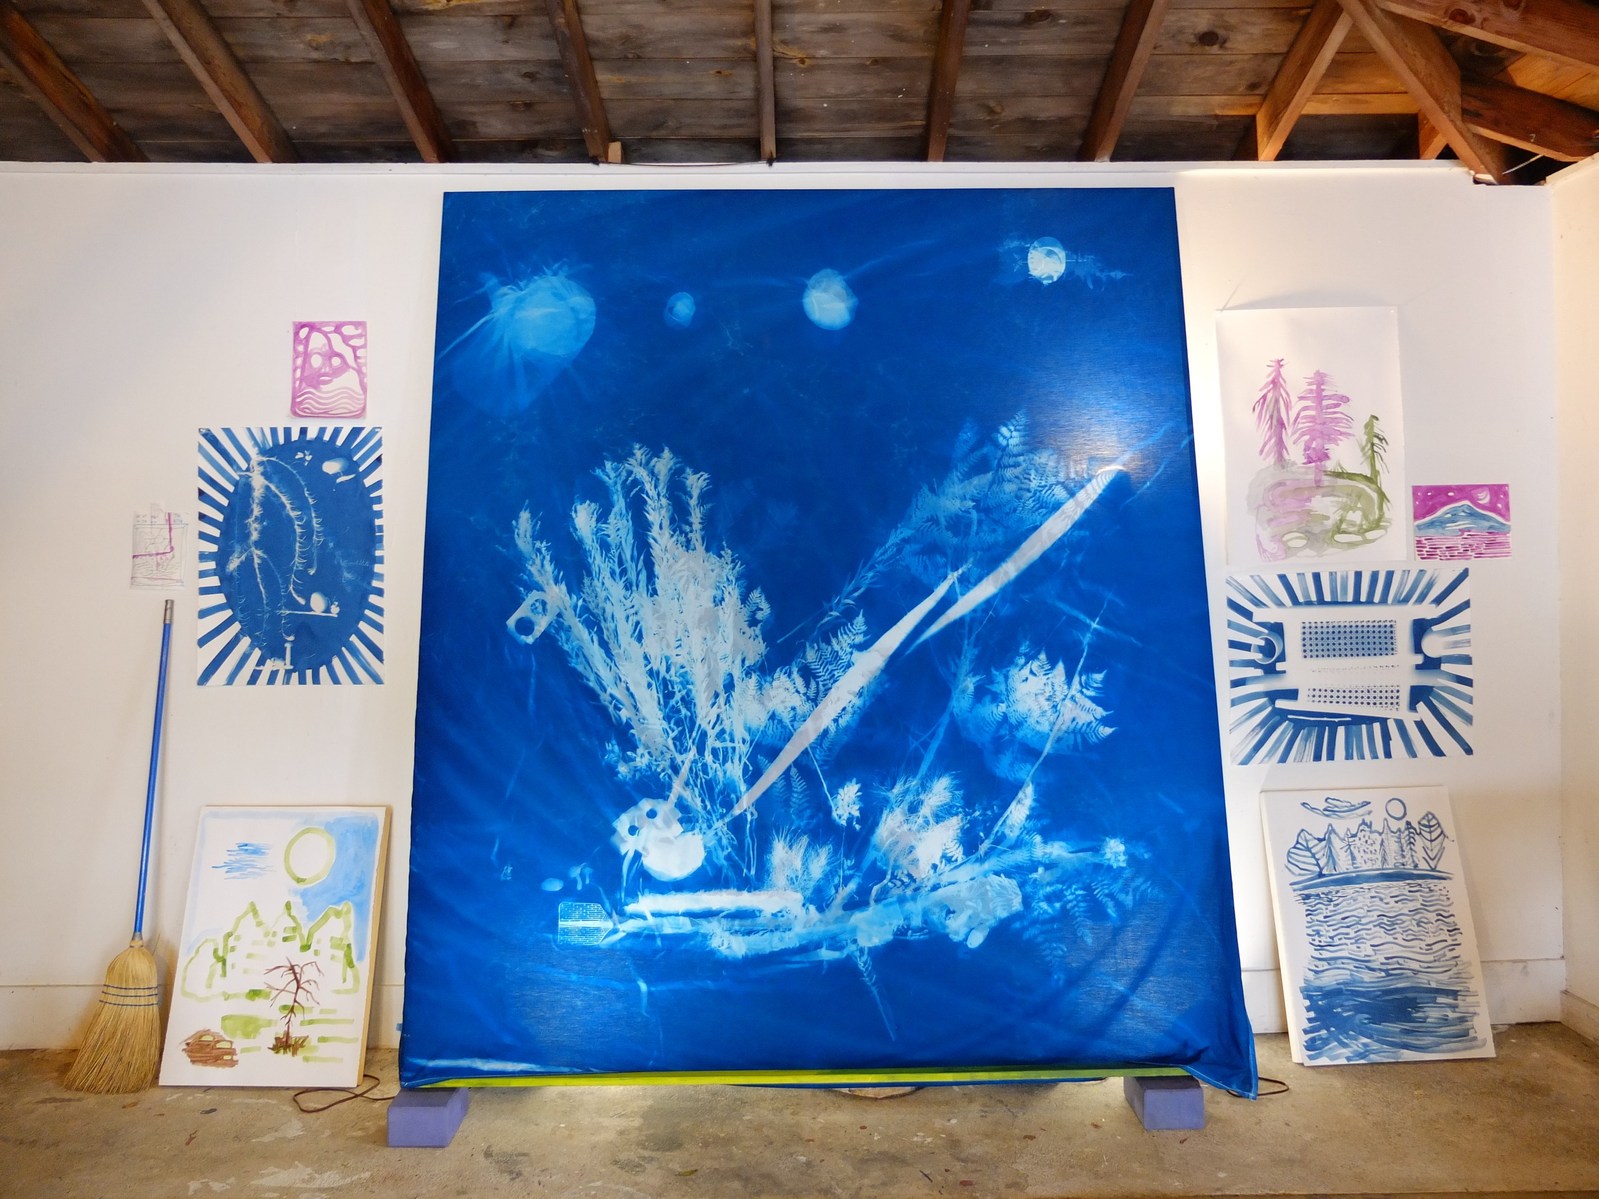 art works salon style in  the studio of
nellie appleby 
cyanotype